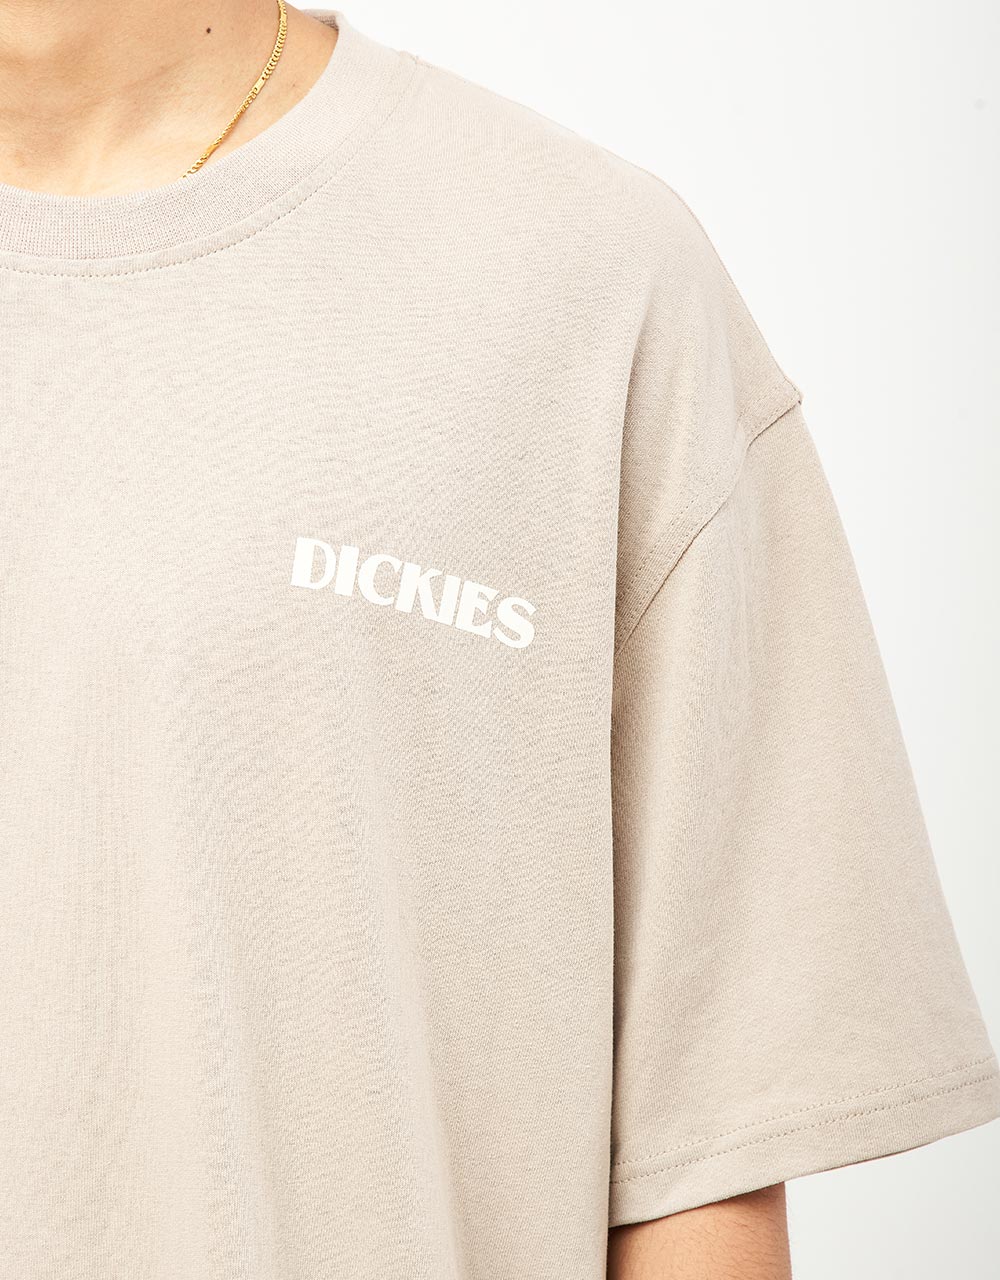 Dickies Herndon T-Shirt - Sandstone